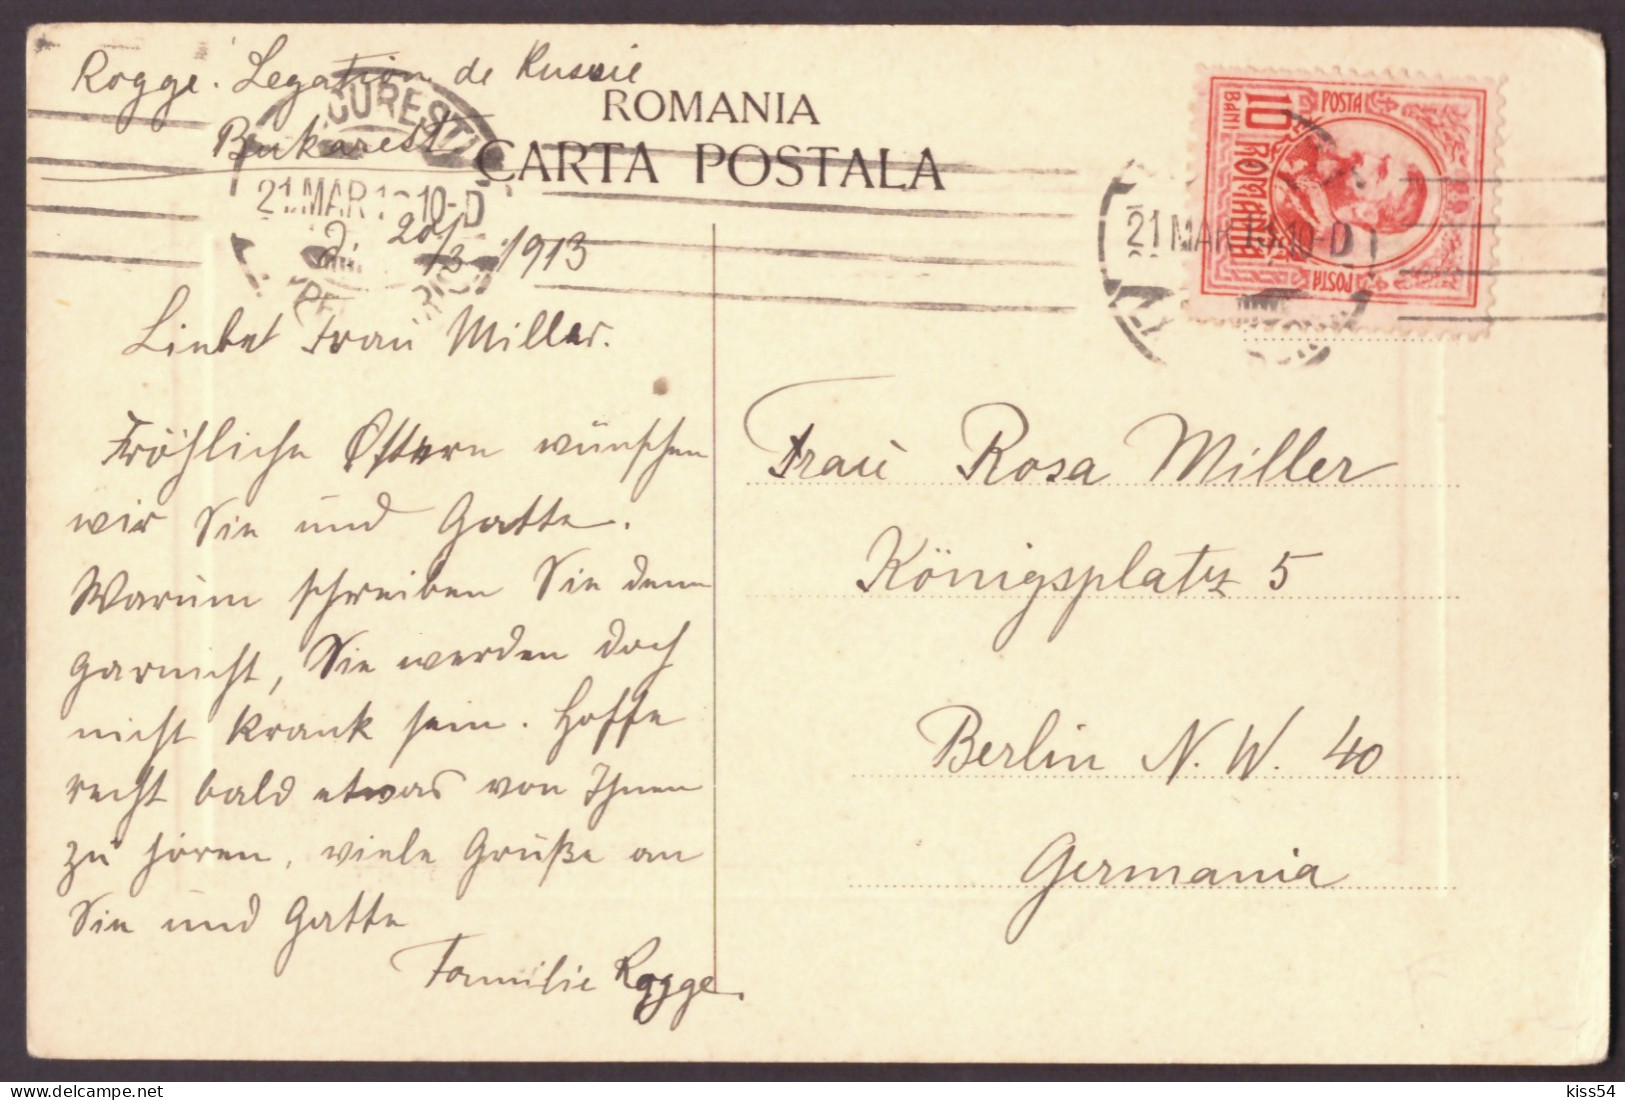 RO 74 - 24885 BUCURESTI, Justice Palace, Rama, Romania - Old Postcard, EMBOSSED - Used - 1910 - Rumänien